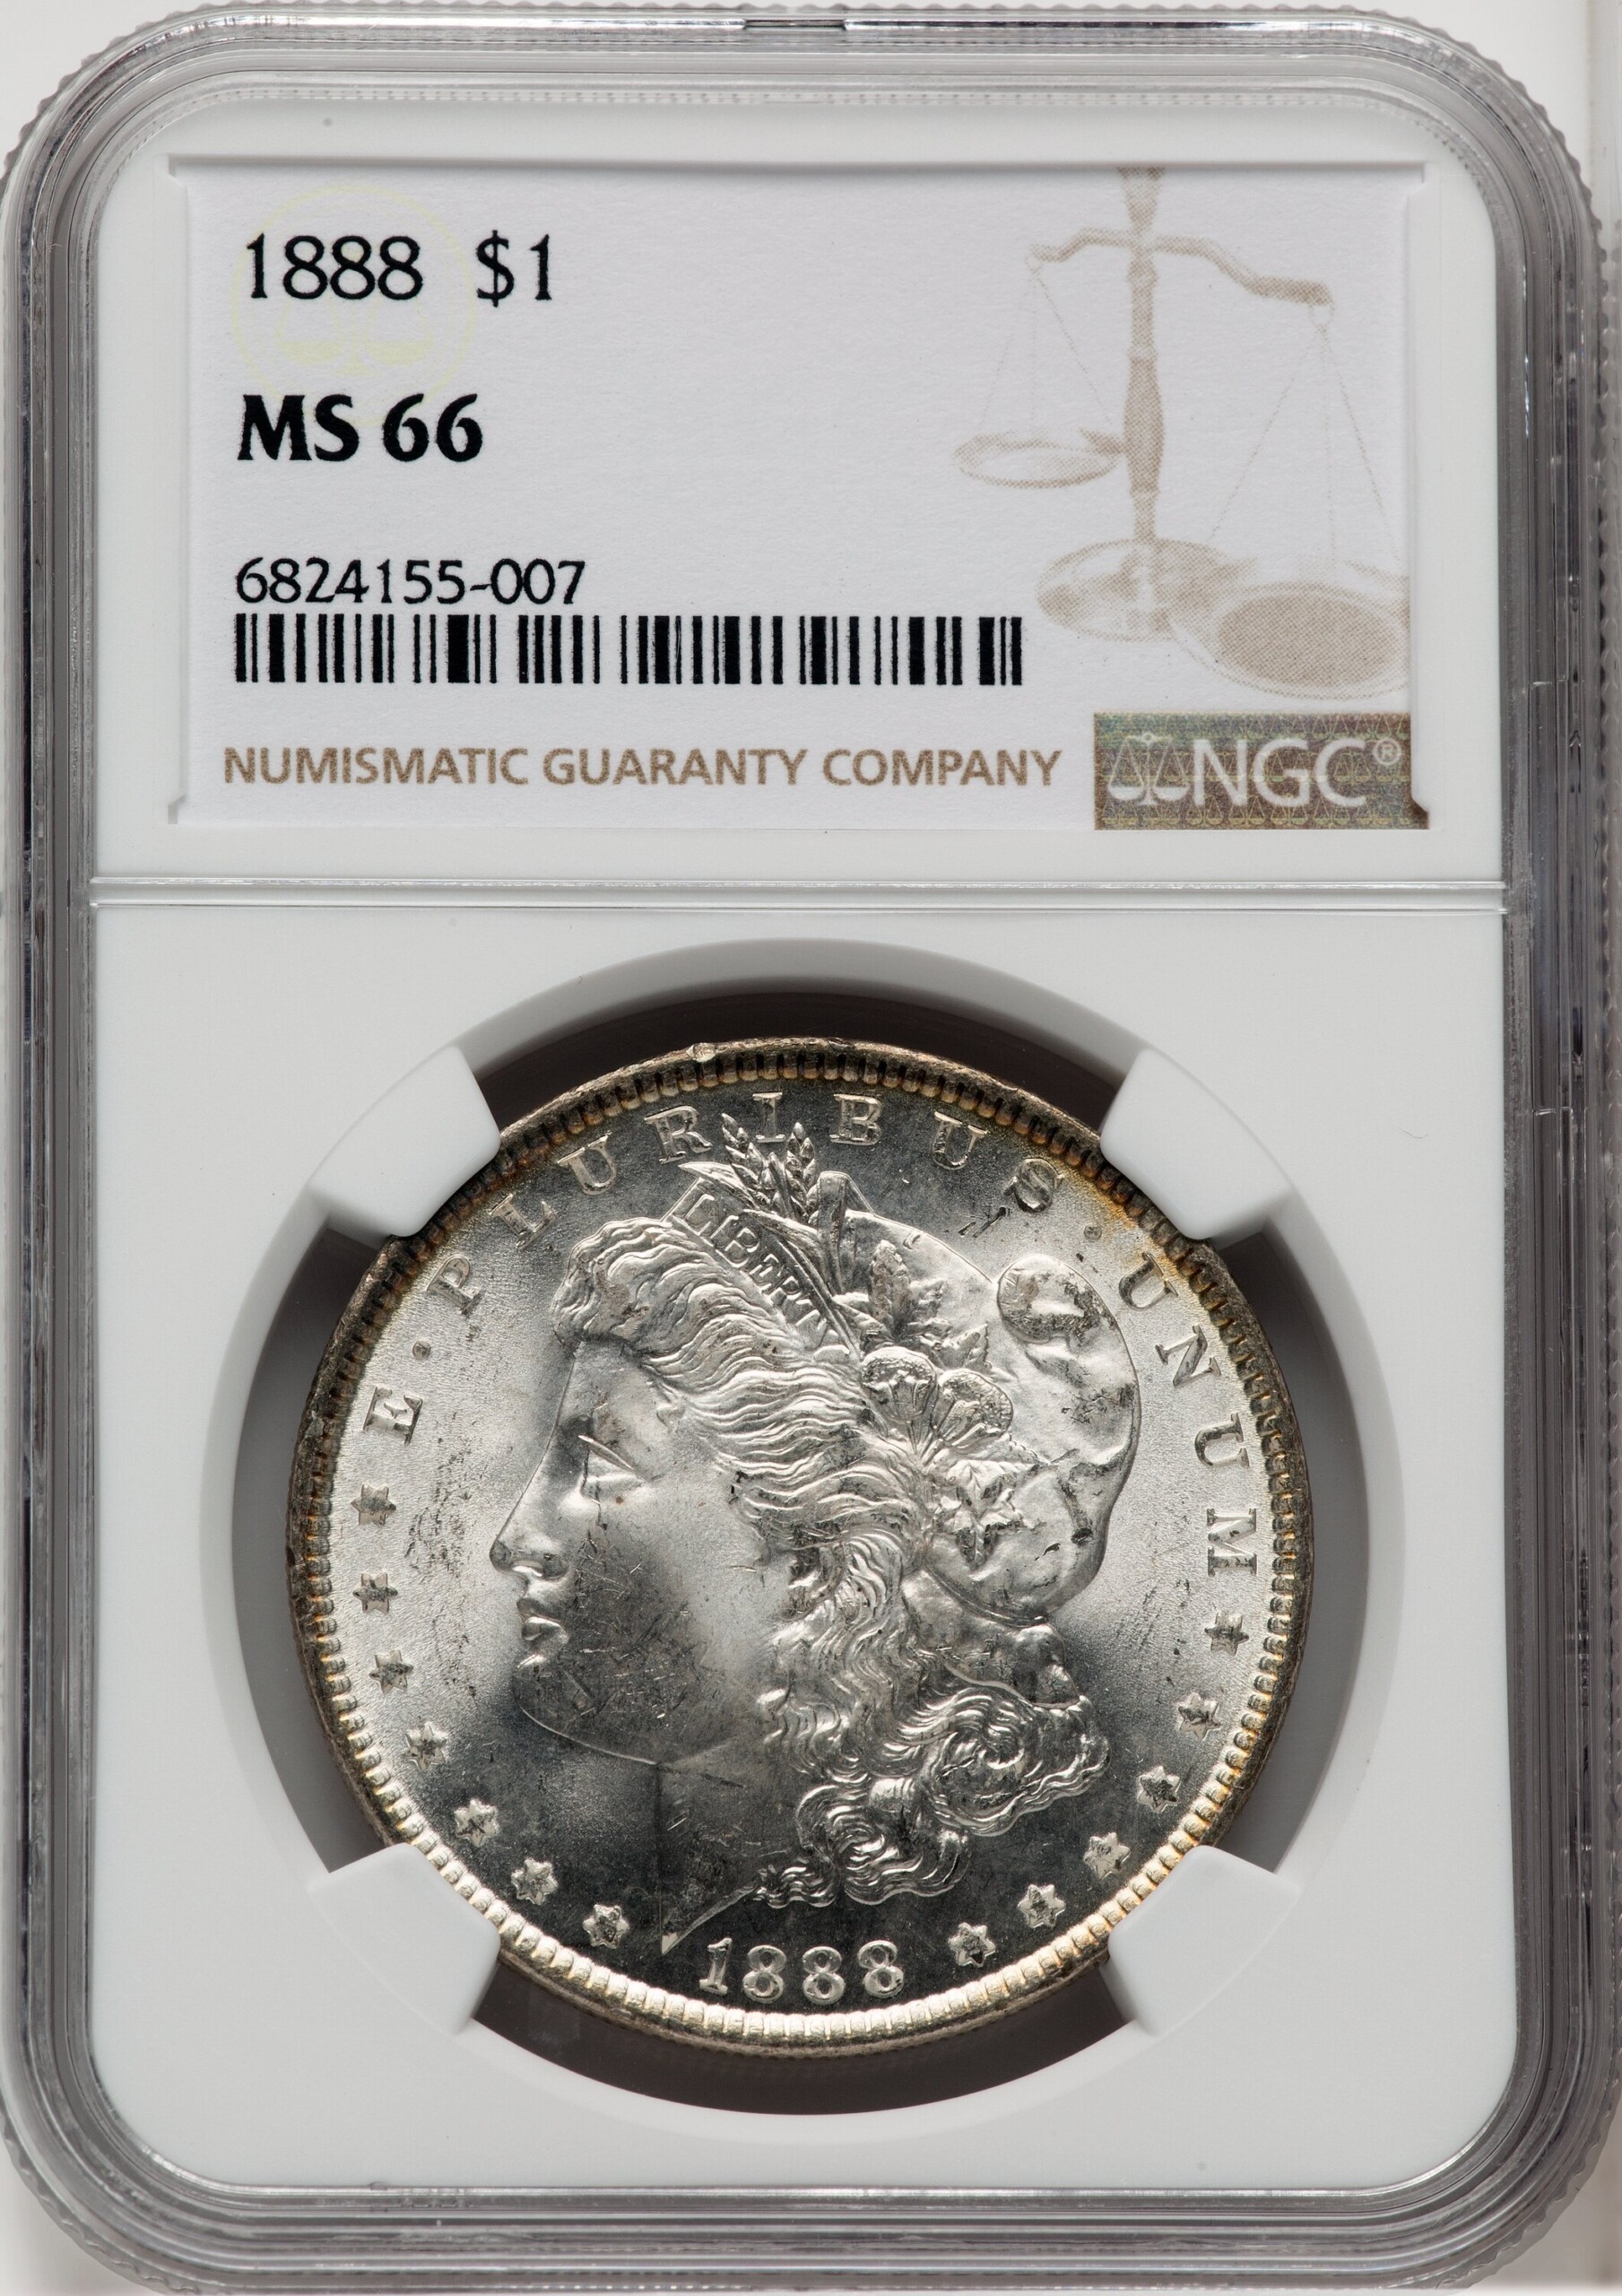 1888 S$1 66 NGC